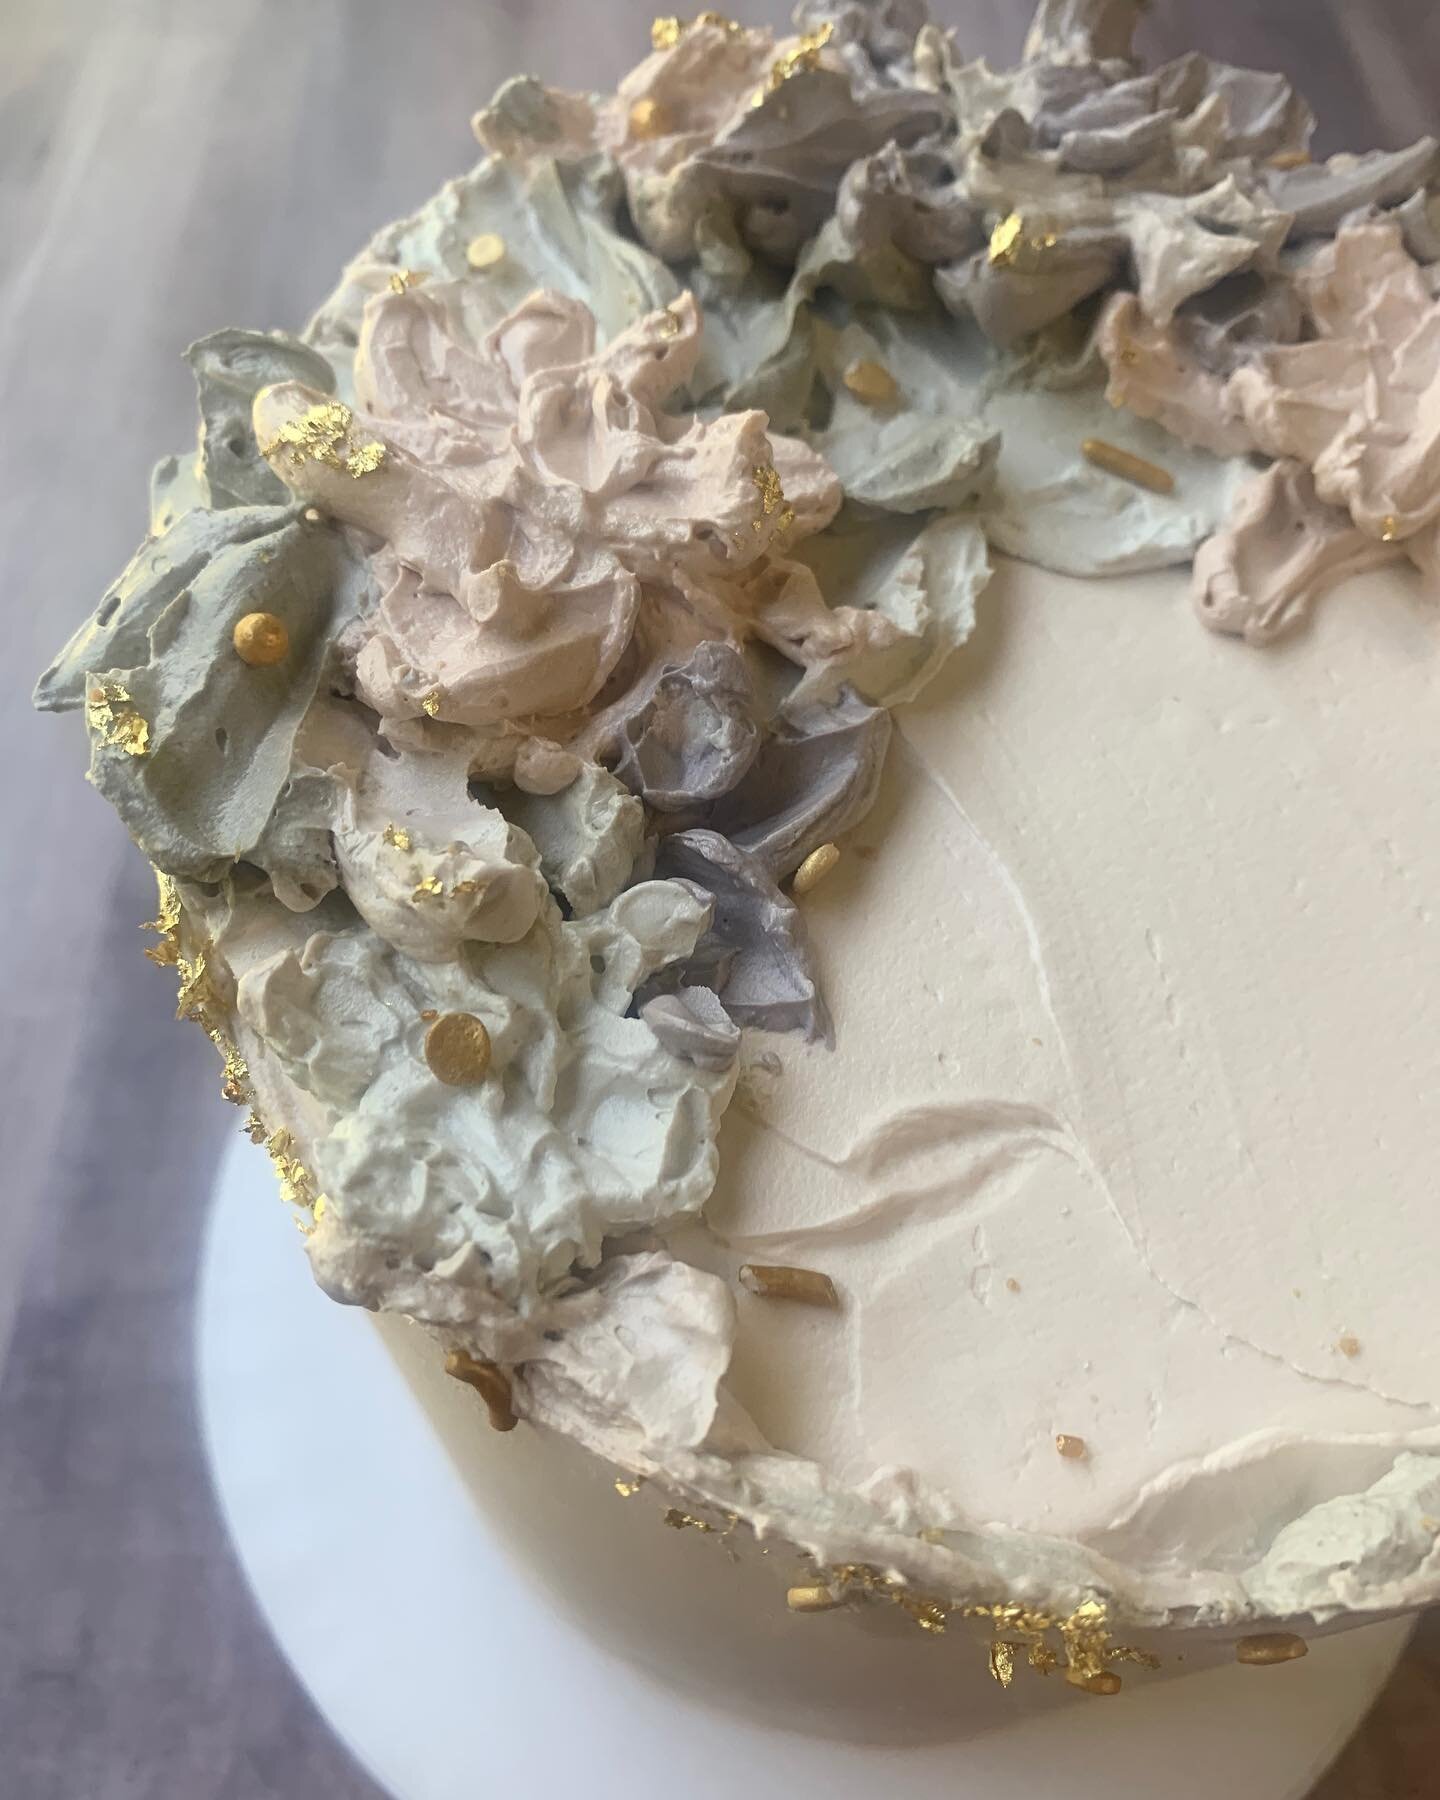 Oil painting style cake with a touch of gold. ✨✨✨

Vanilla cake with vanilla Swiss meringue buttercream. A classic. 

#cake #vanilla #swissmeringuebuttercream #fayettevillear #fayettevillearkansas #fayar #nwa #nwarkansas